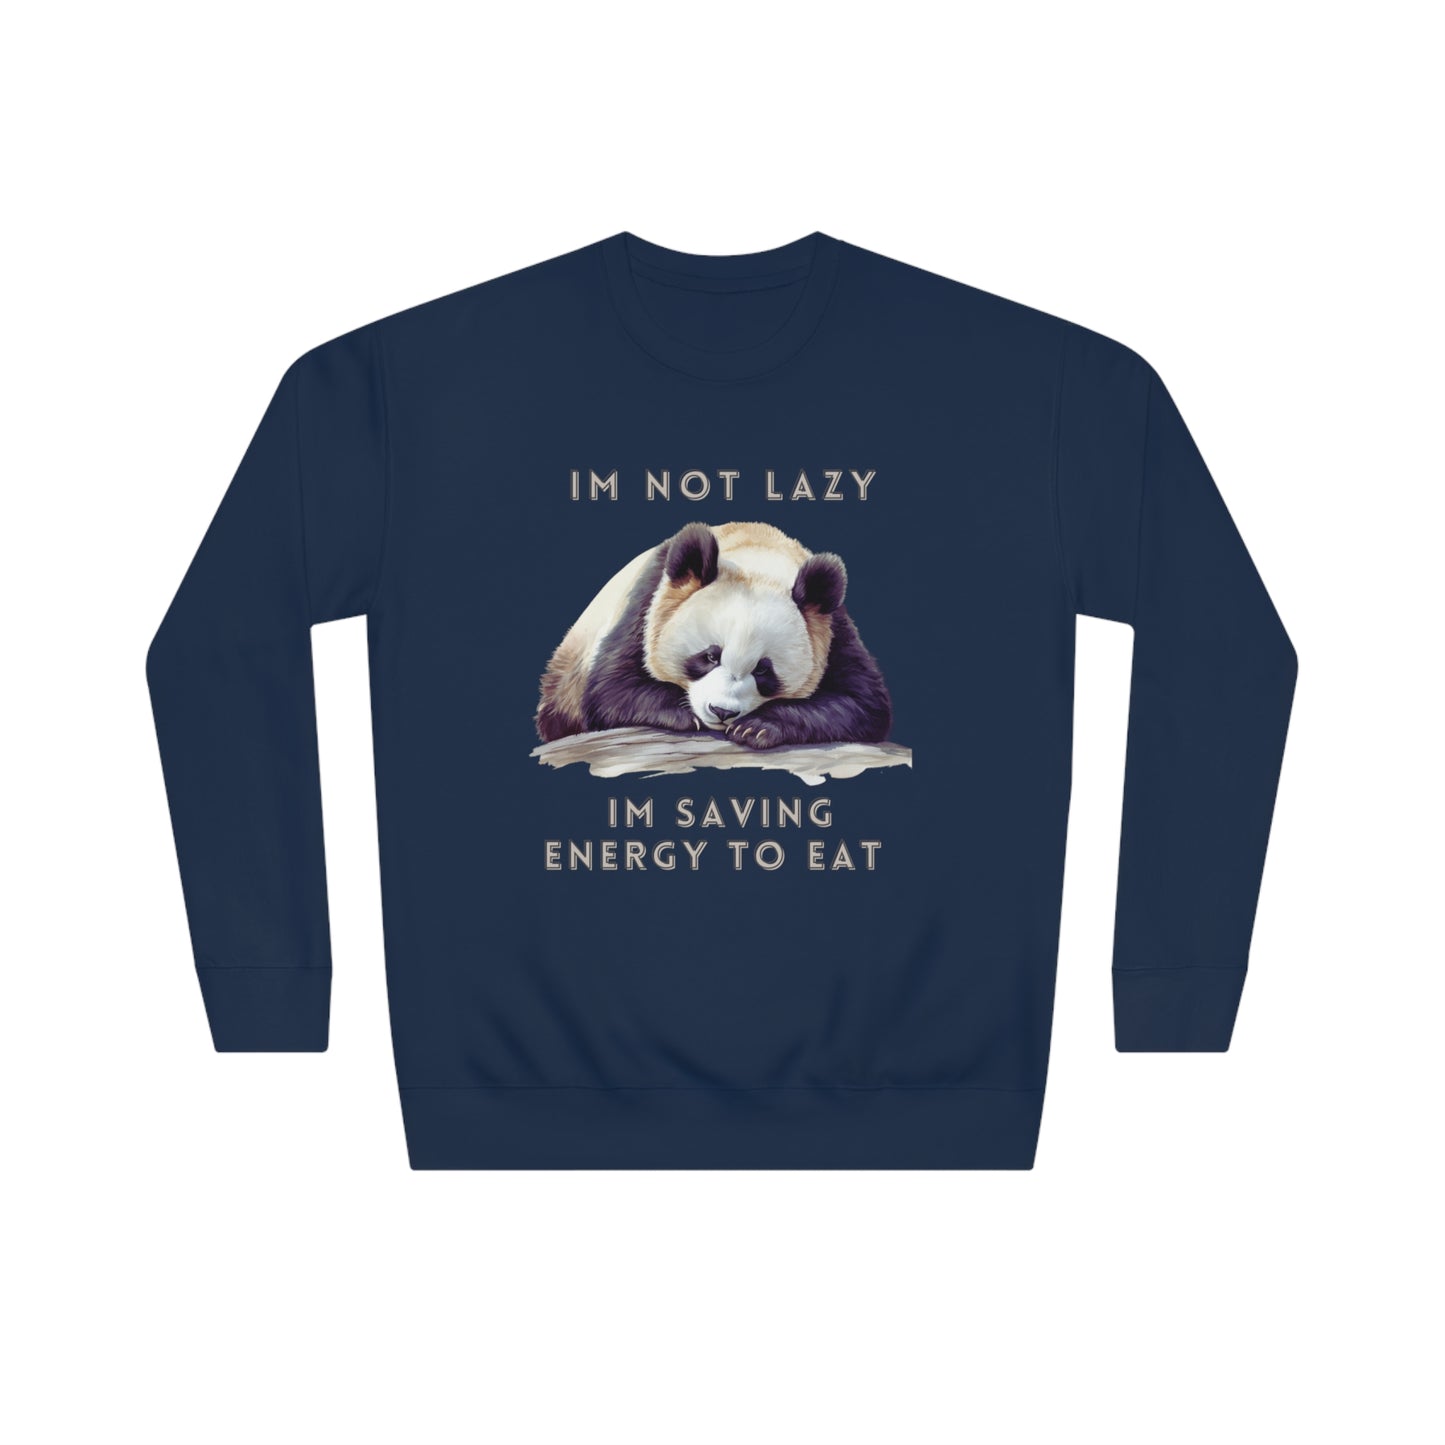 I'm Not Lazy Sweatshirt | Embrace Cozy Relaxation | Funny Panda Sweatshirt | Panda Lover Gift Sweatshirt Navy Blazer S 